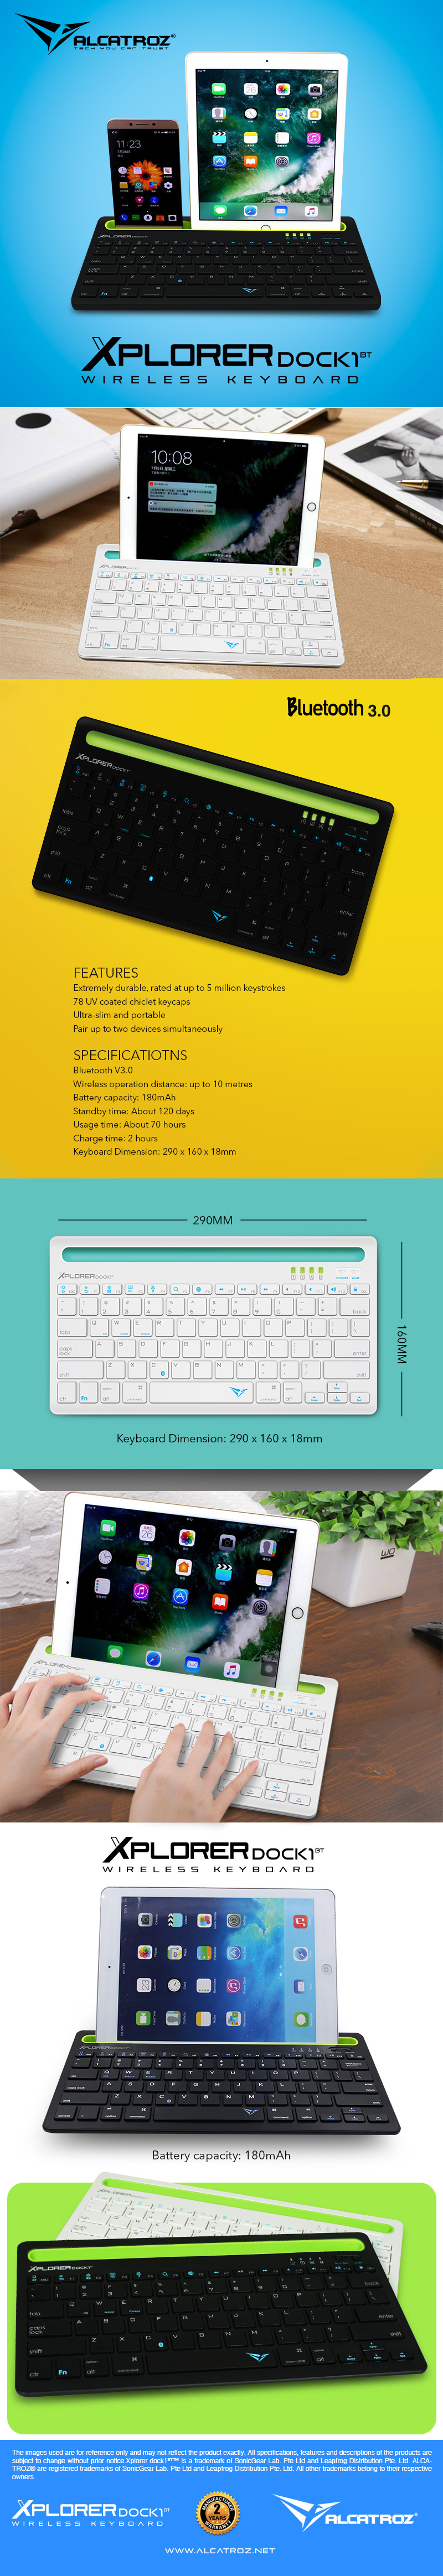 Keyboards-Alcatroz-Xplorer-Dock-1-Bluetooth-Tablet-Docking-Keyboard-Black-Red-2